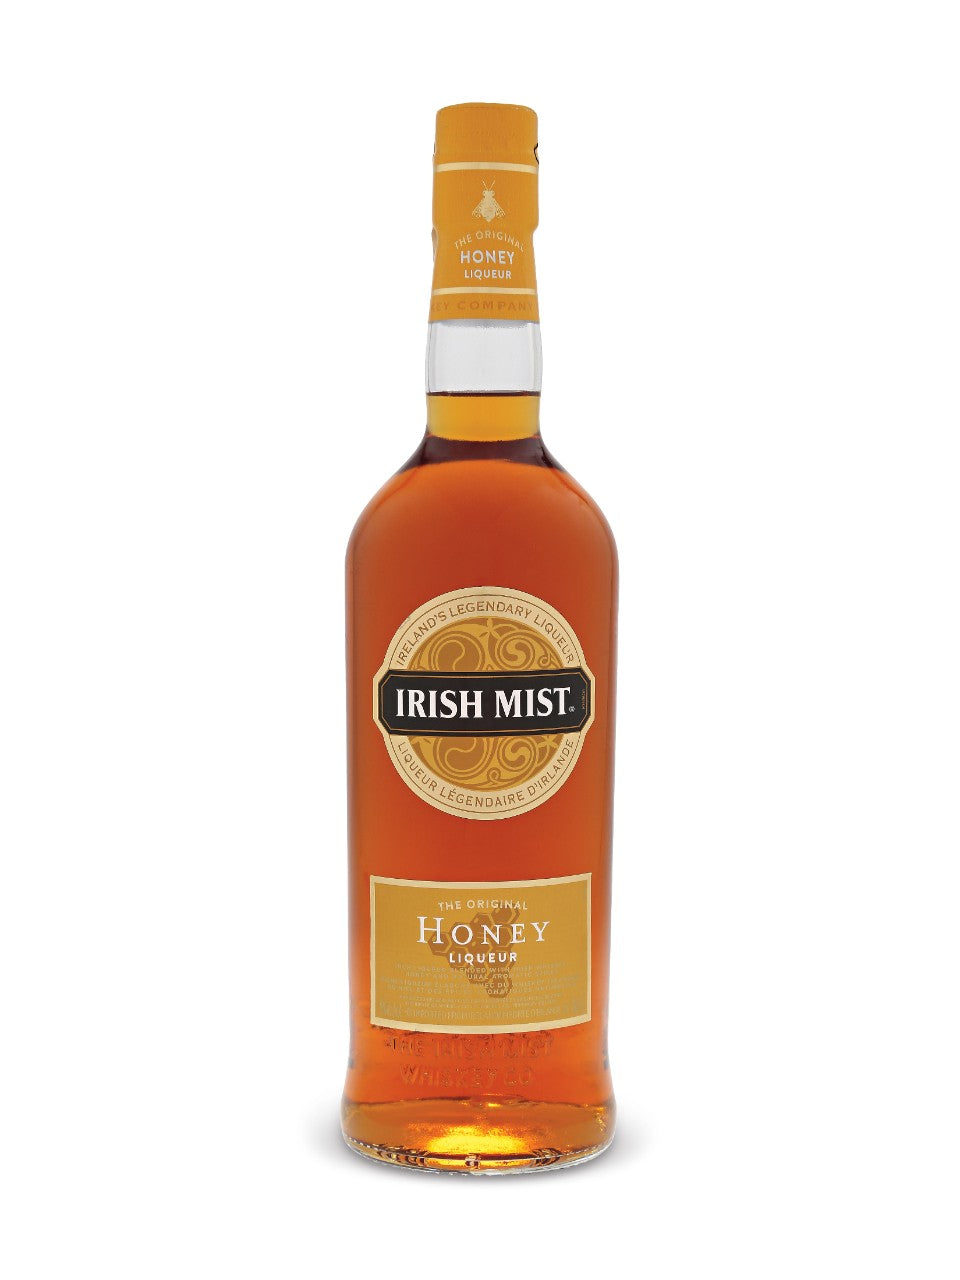 Irish Mist Honey Liqueur 750 ml bottle